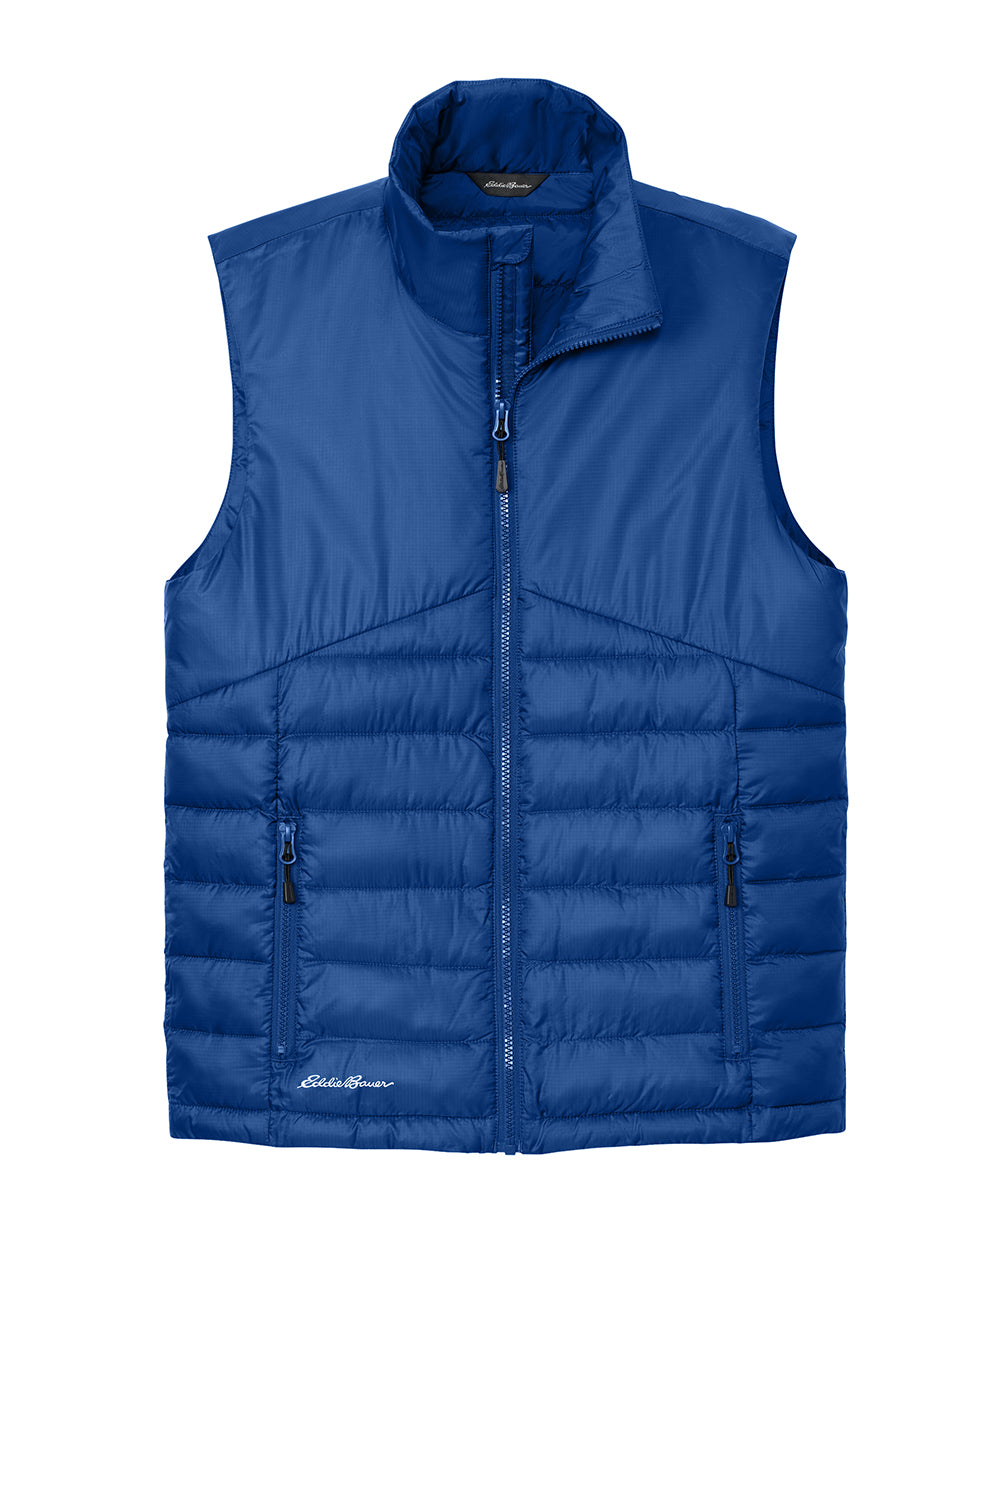 Eddie Bauer EB512 Mens Water Resistant Quilted Full Zip Vest Cobalt Blue Flat Front